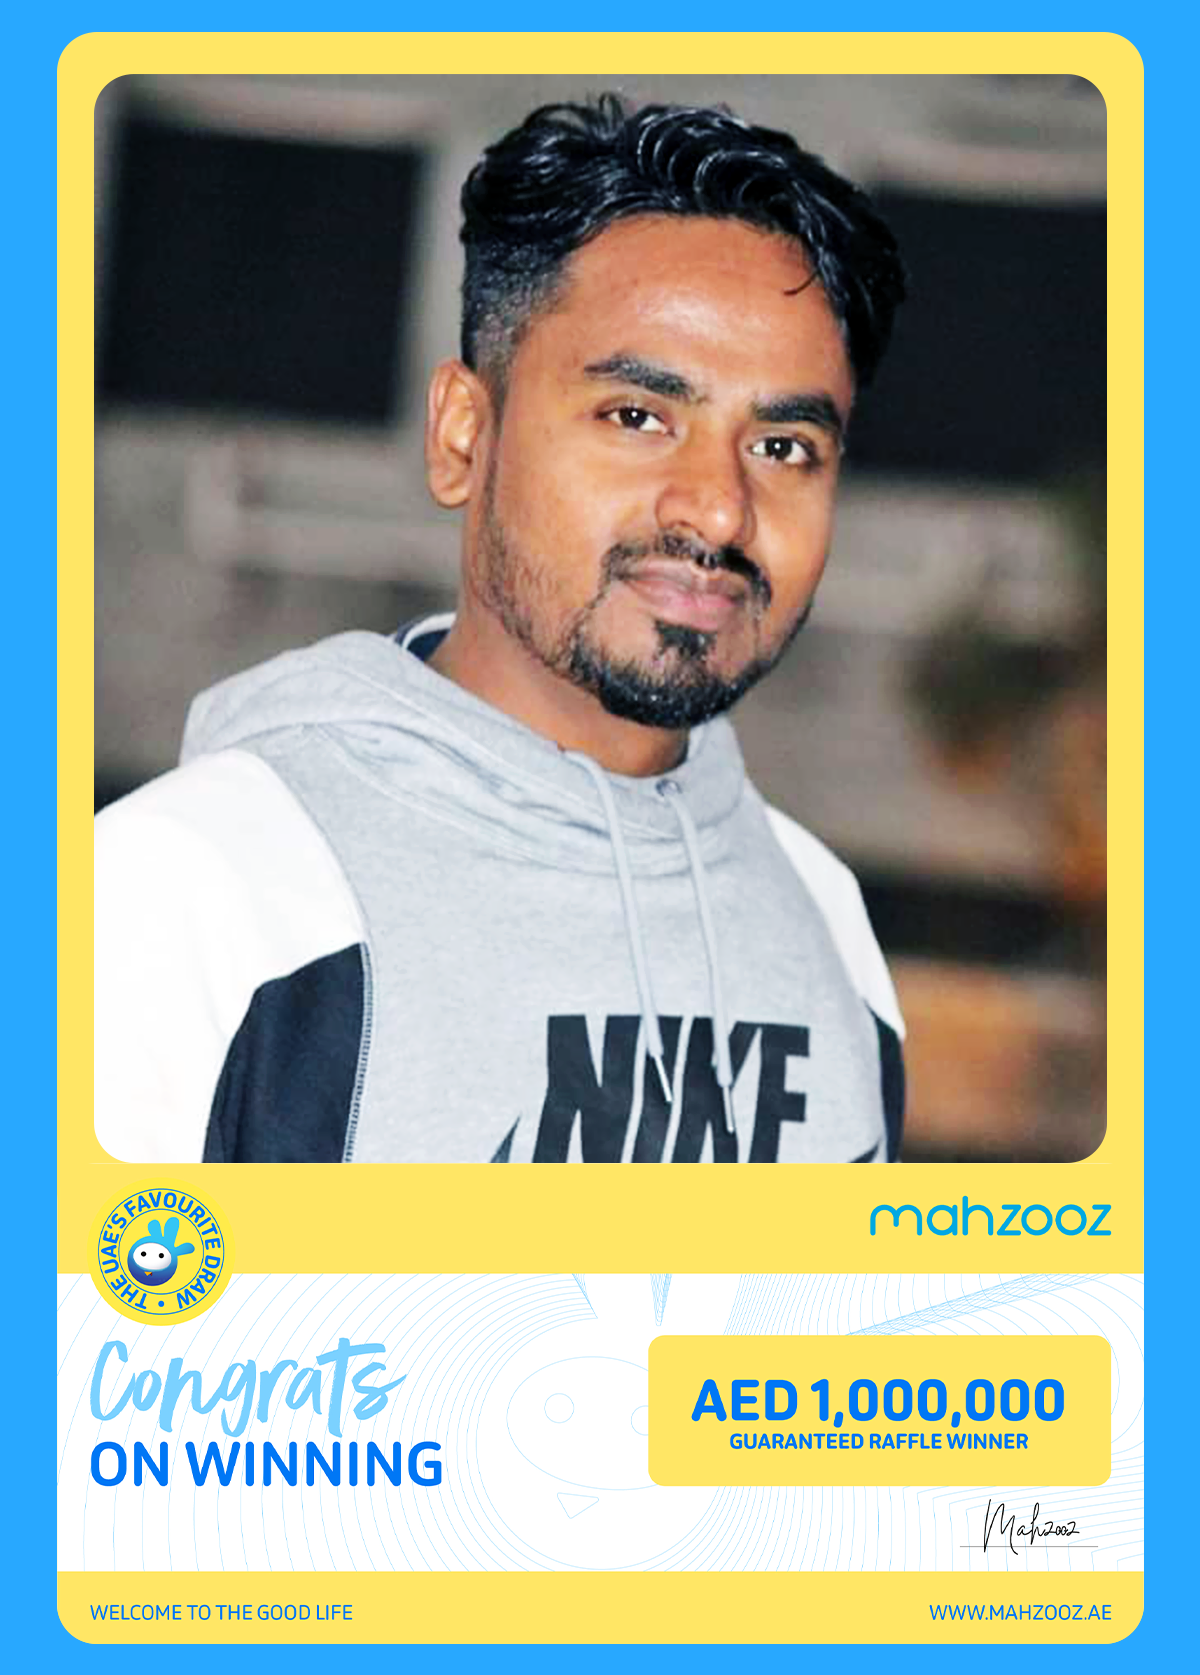 Mahzooz celebrates one more raffle draw winner of AED 1,000,000